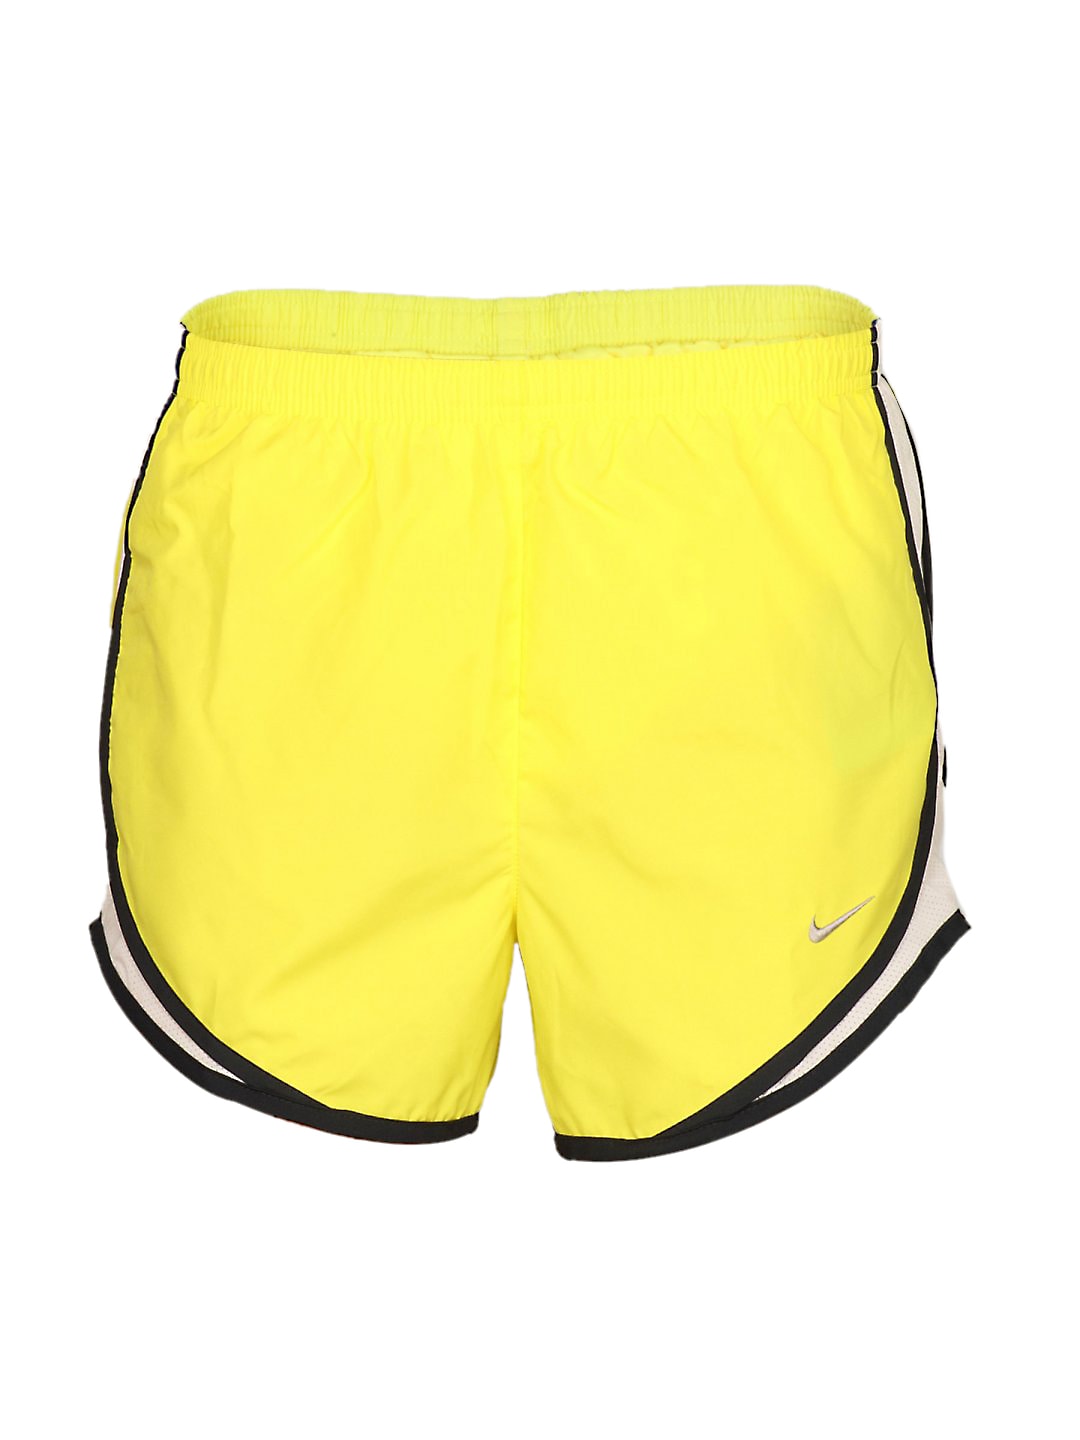 Nike Women's Tempo yellow Short